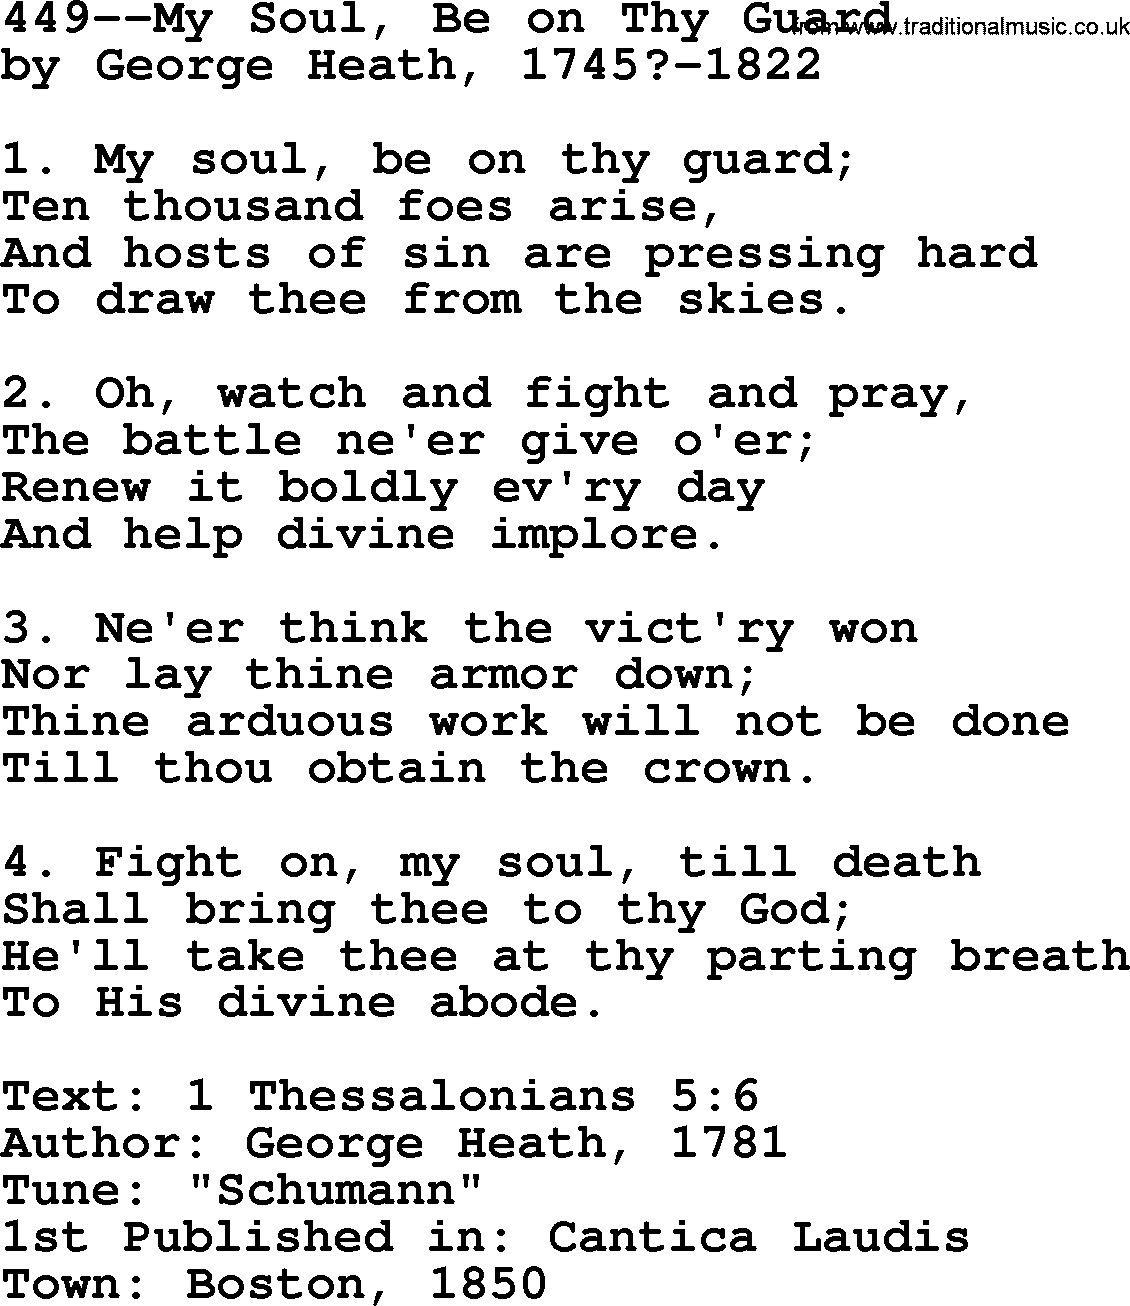 Lutheran Hymn: 449--My Soul, Be on Thy Guard.txt lyrics with PDF